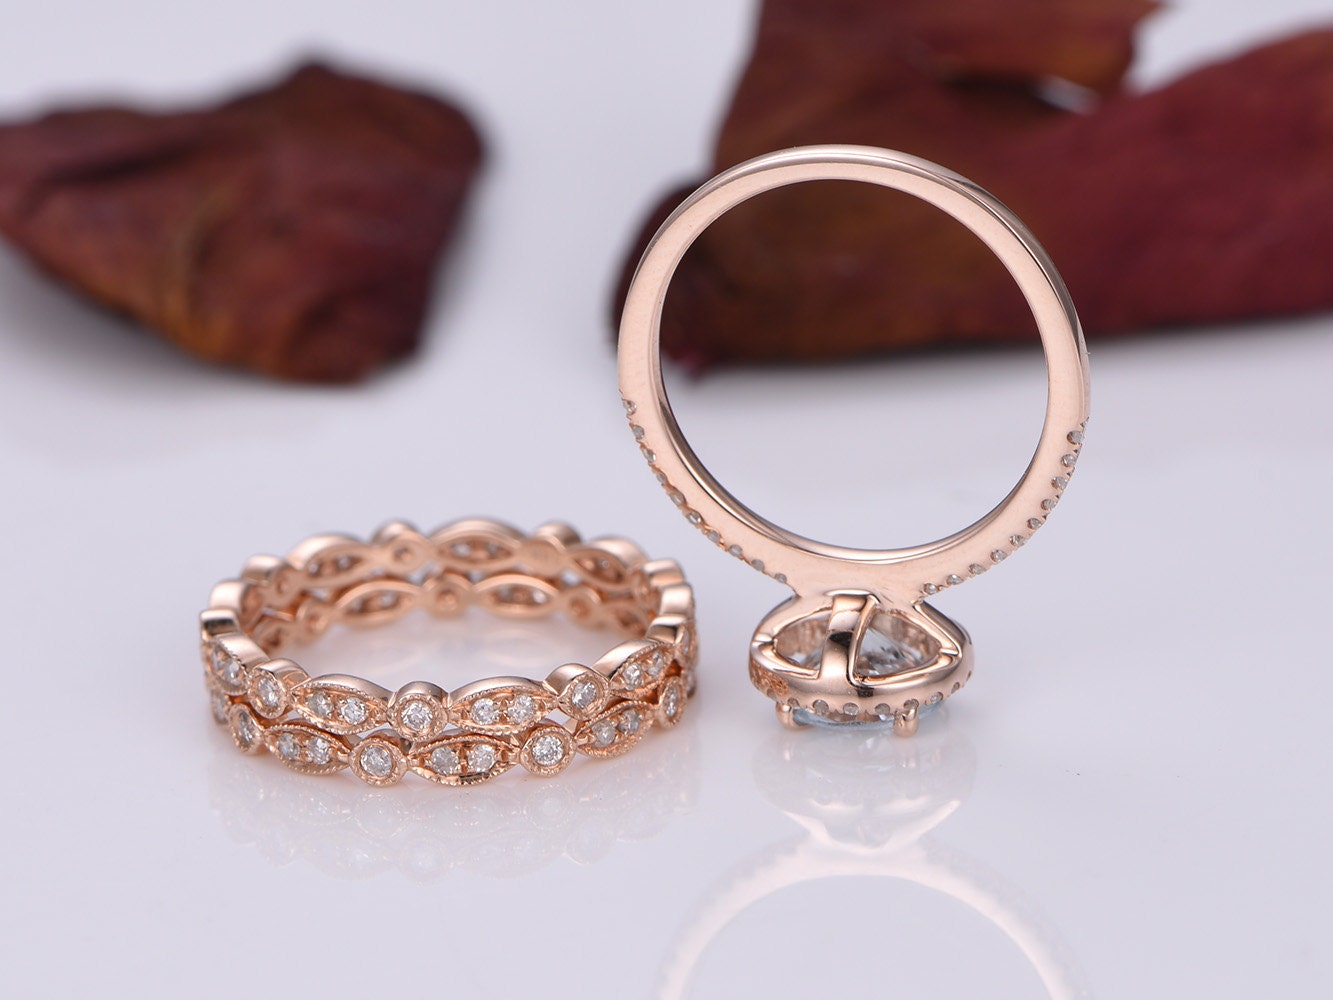 Aquamarine engagement ring set 14k rose gold wedding ring 7mm round cut natural aqumarine full eternity diamond wedding band stackable ring